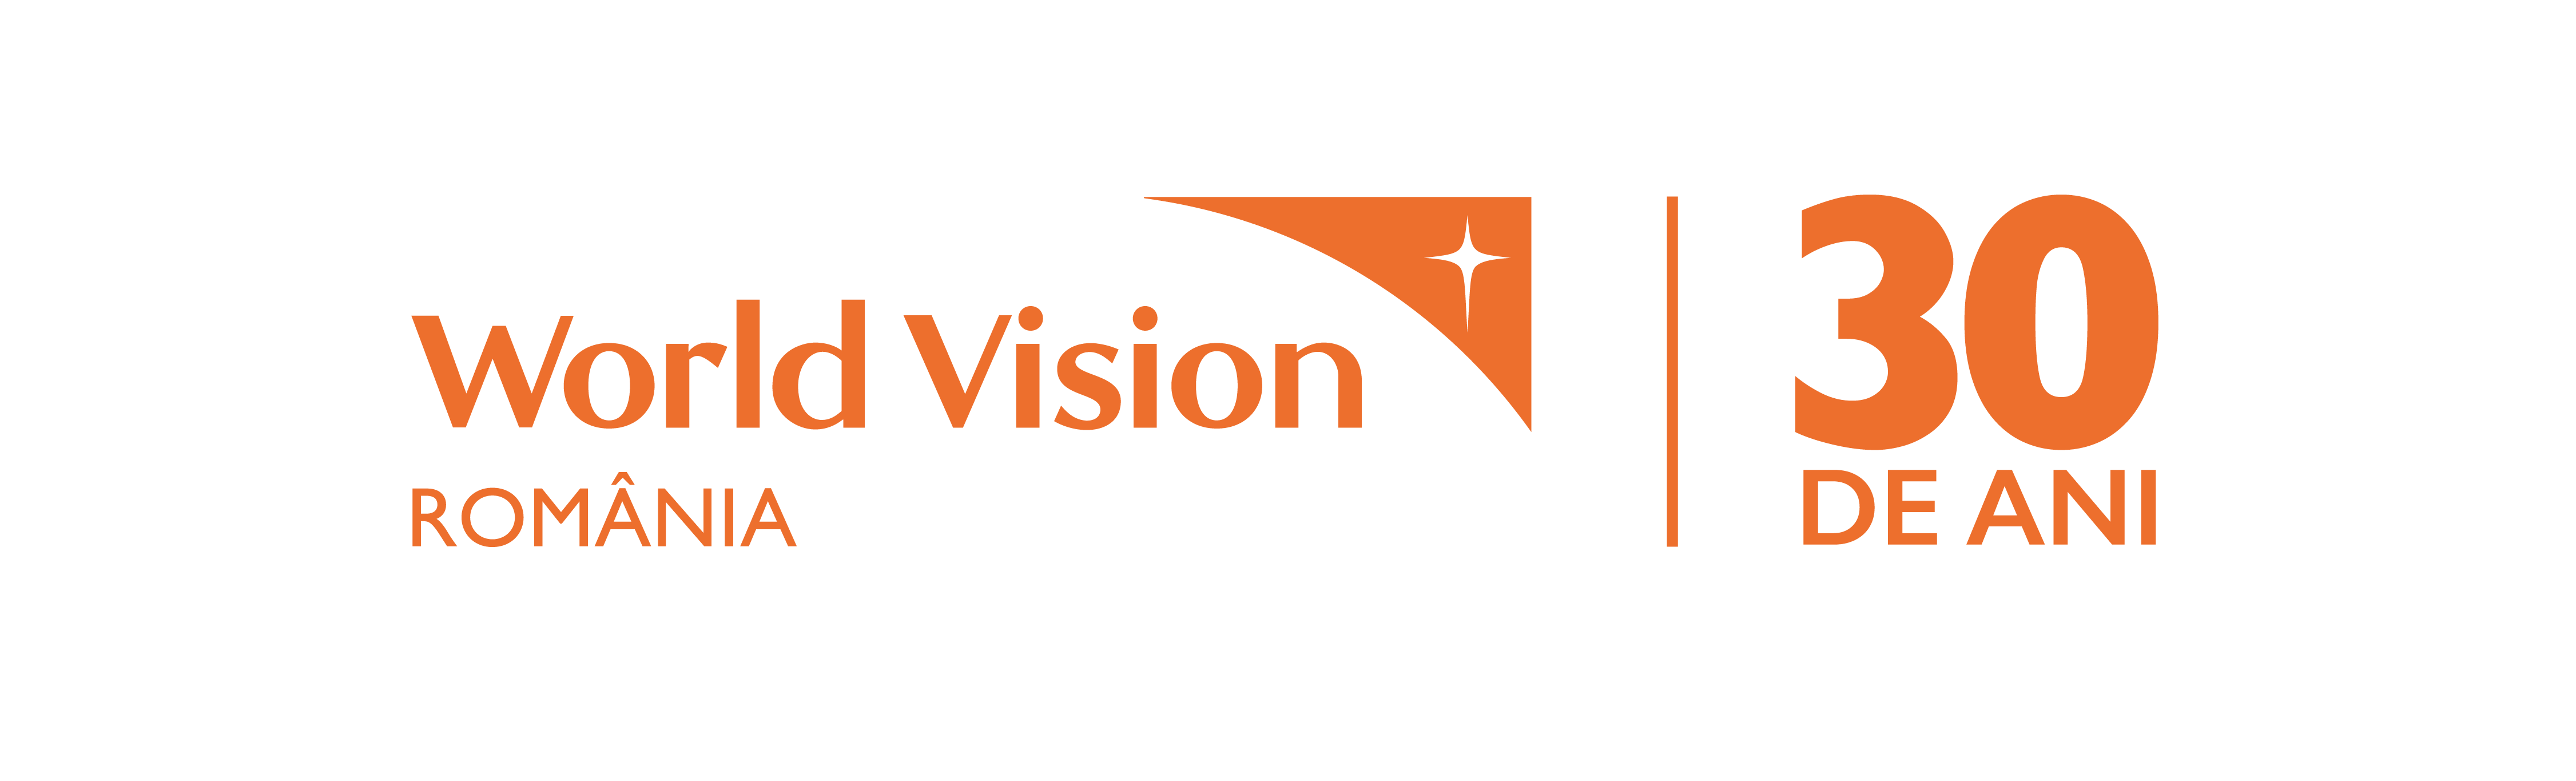 World Vision România Logo